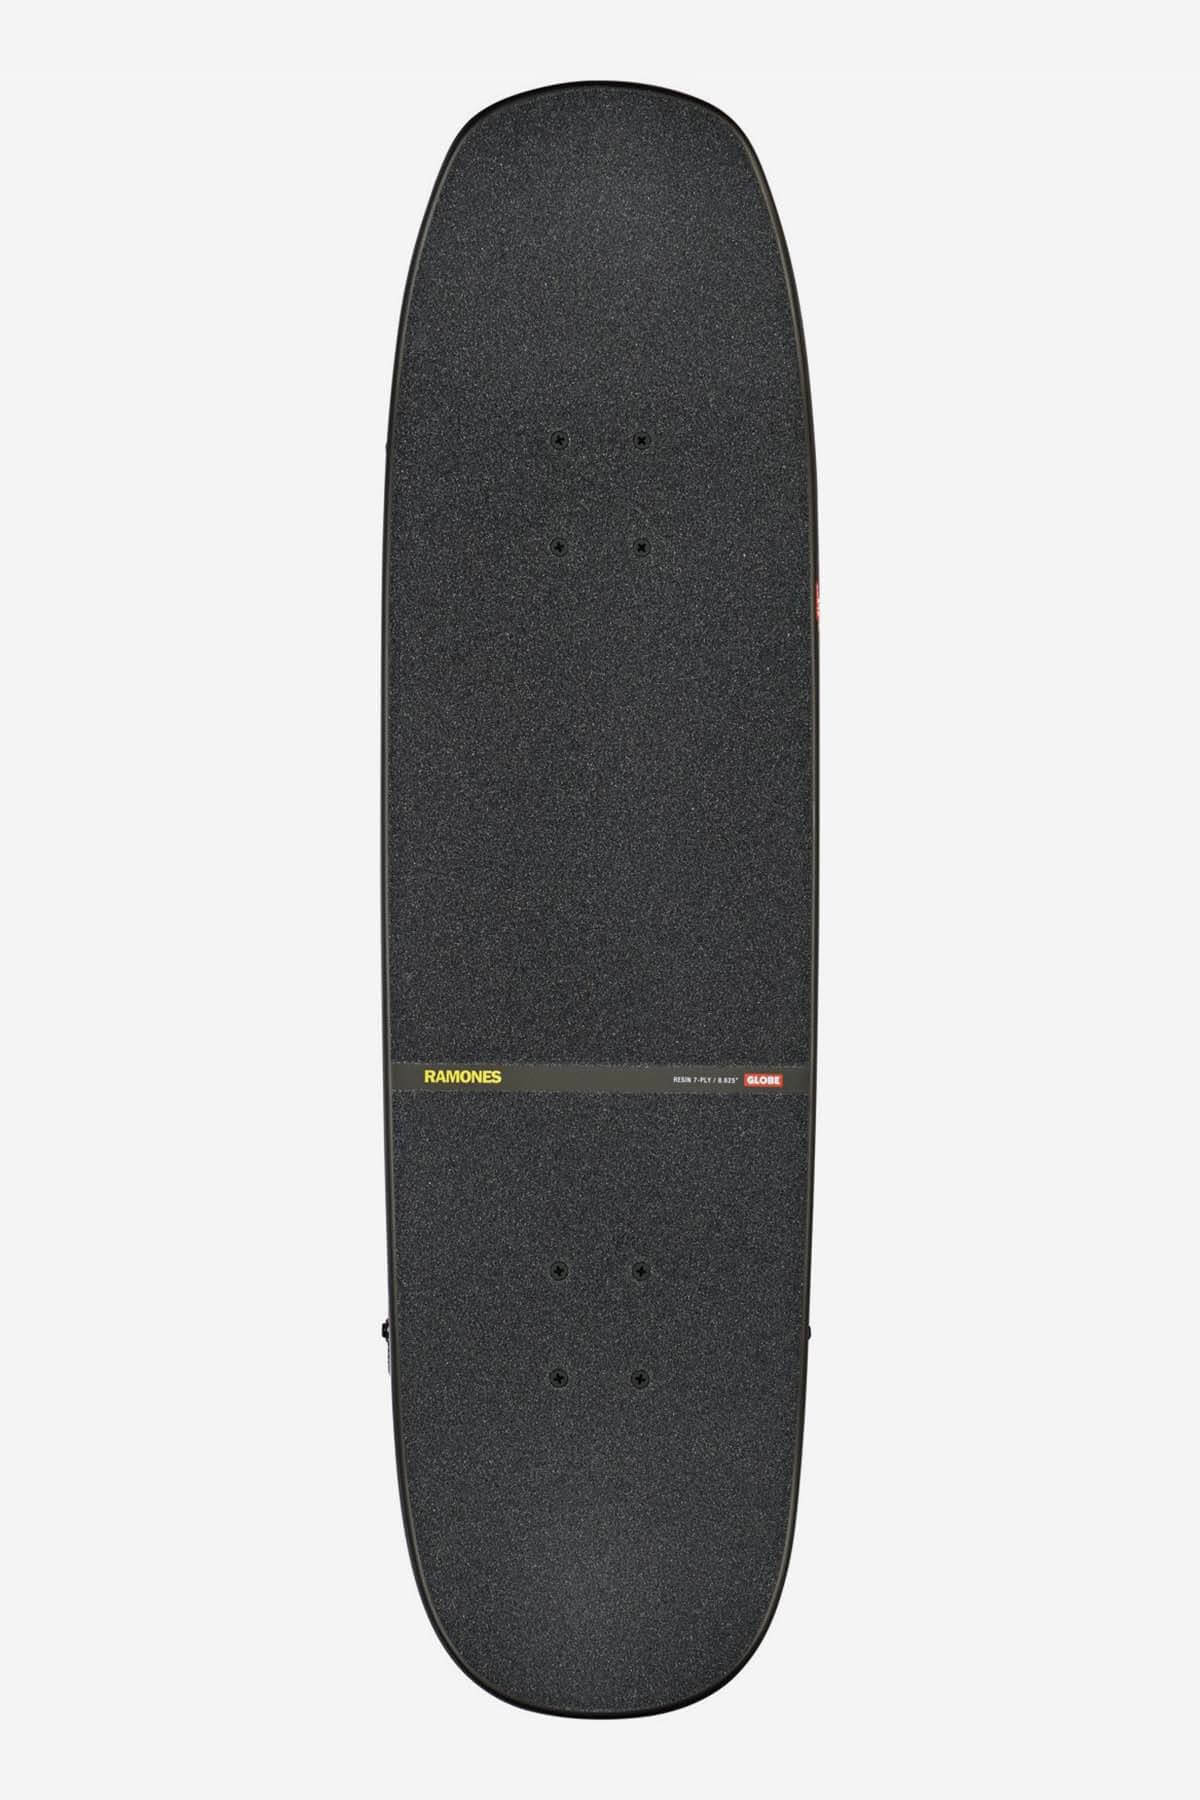 martello ramones hey ho 8,625" completo skateboard